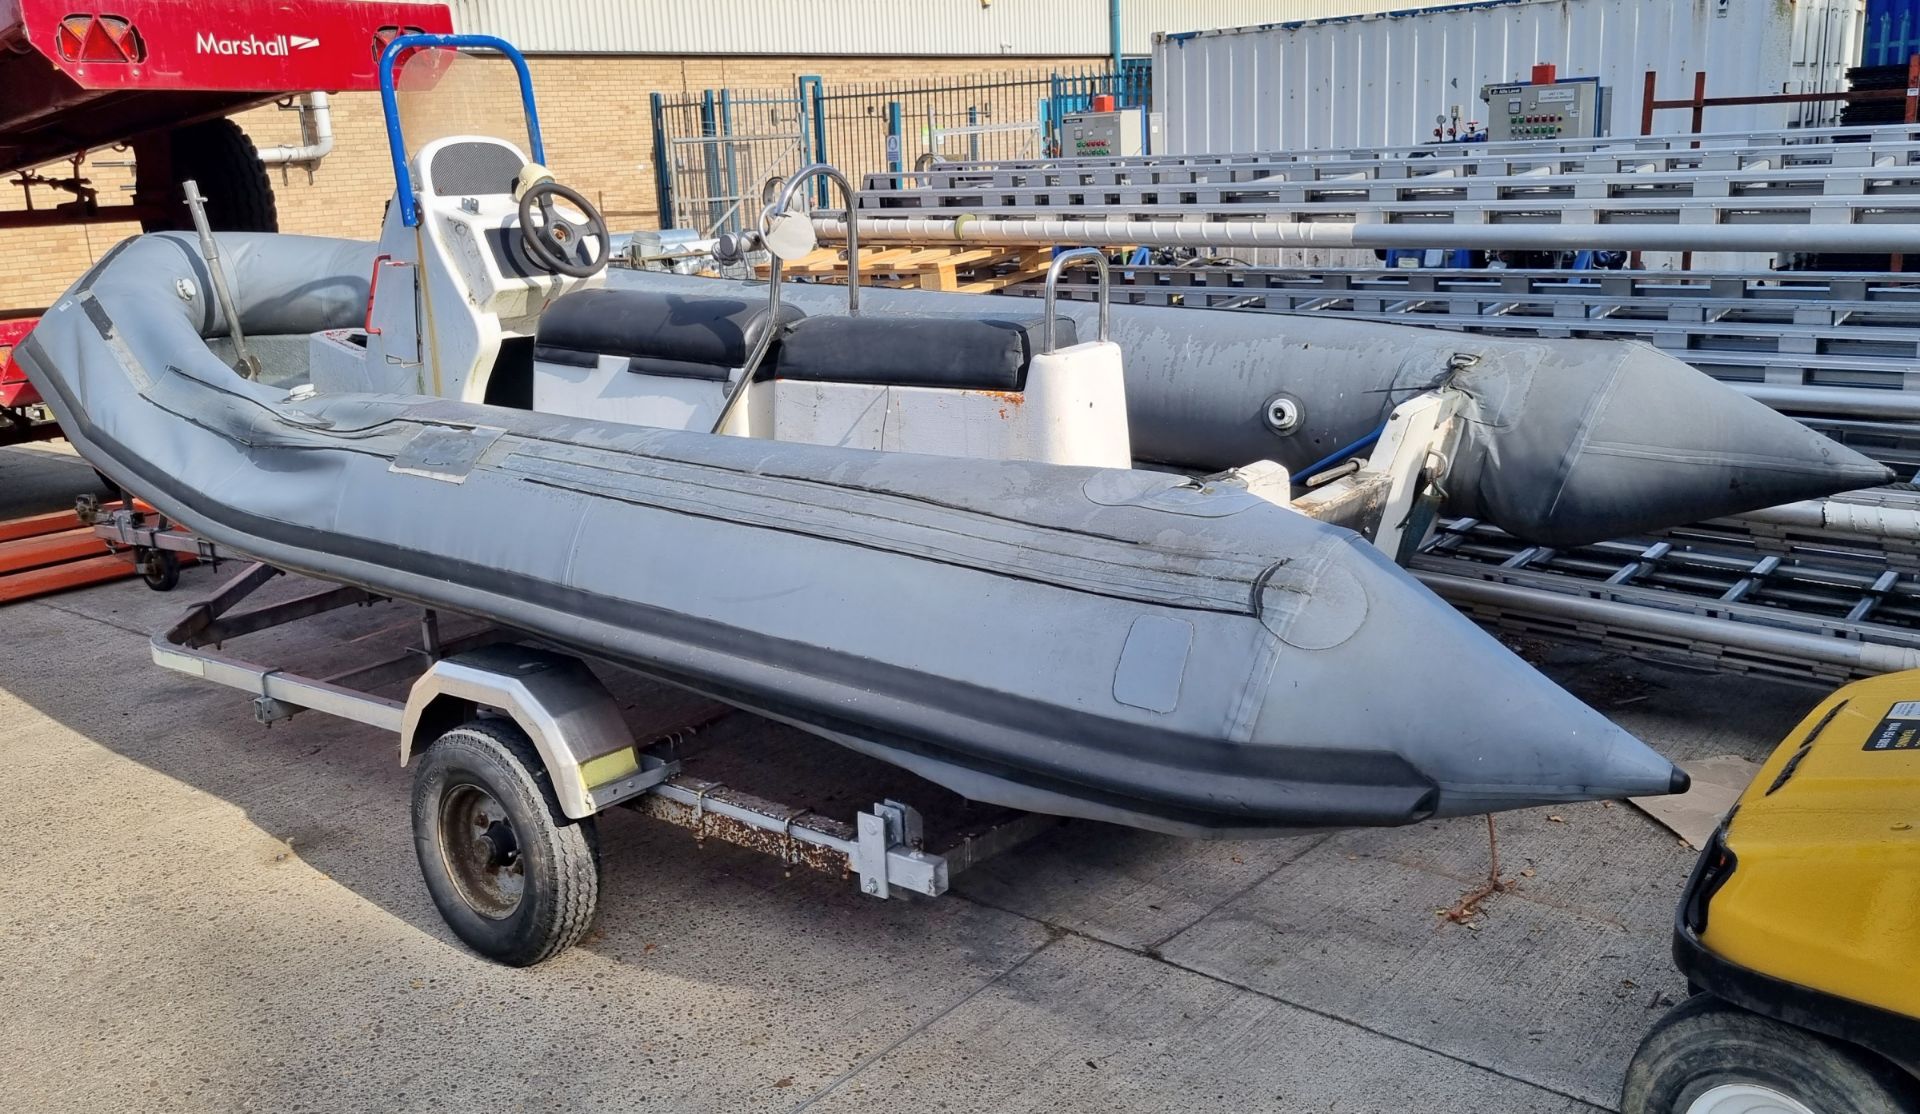 Avon searider 5.4m RIB boat (L5700 x W2150mm) on galvanised trailer - Slow leak on one tube - Bild 2 aus 10